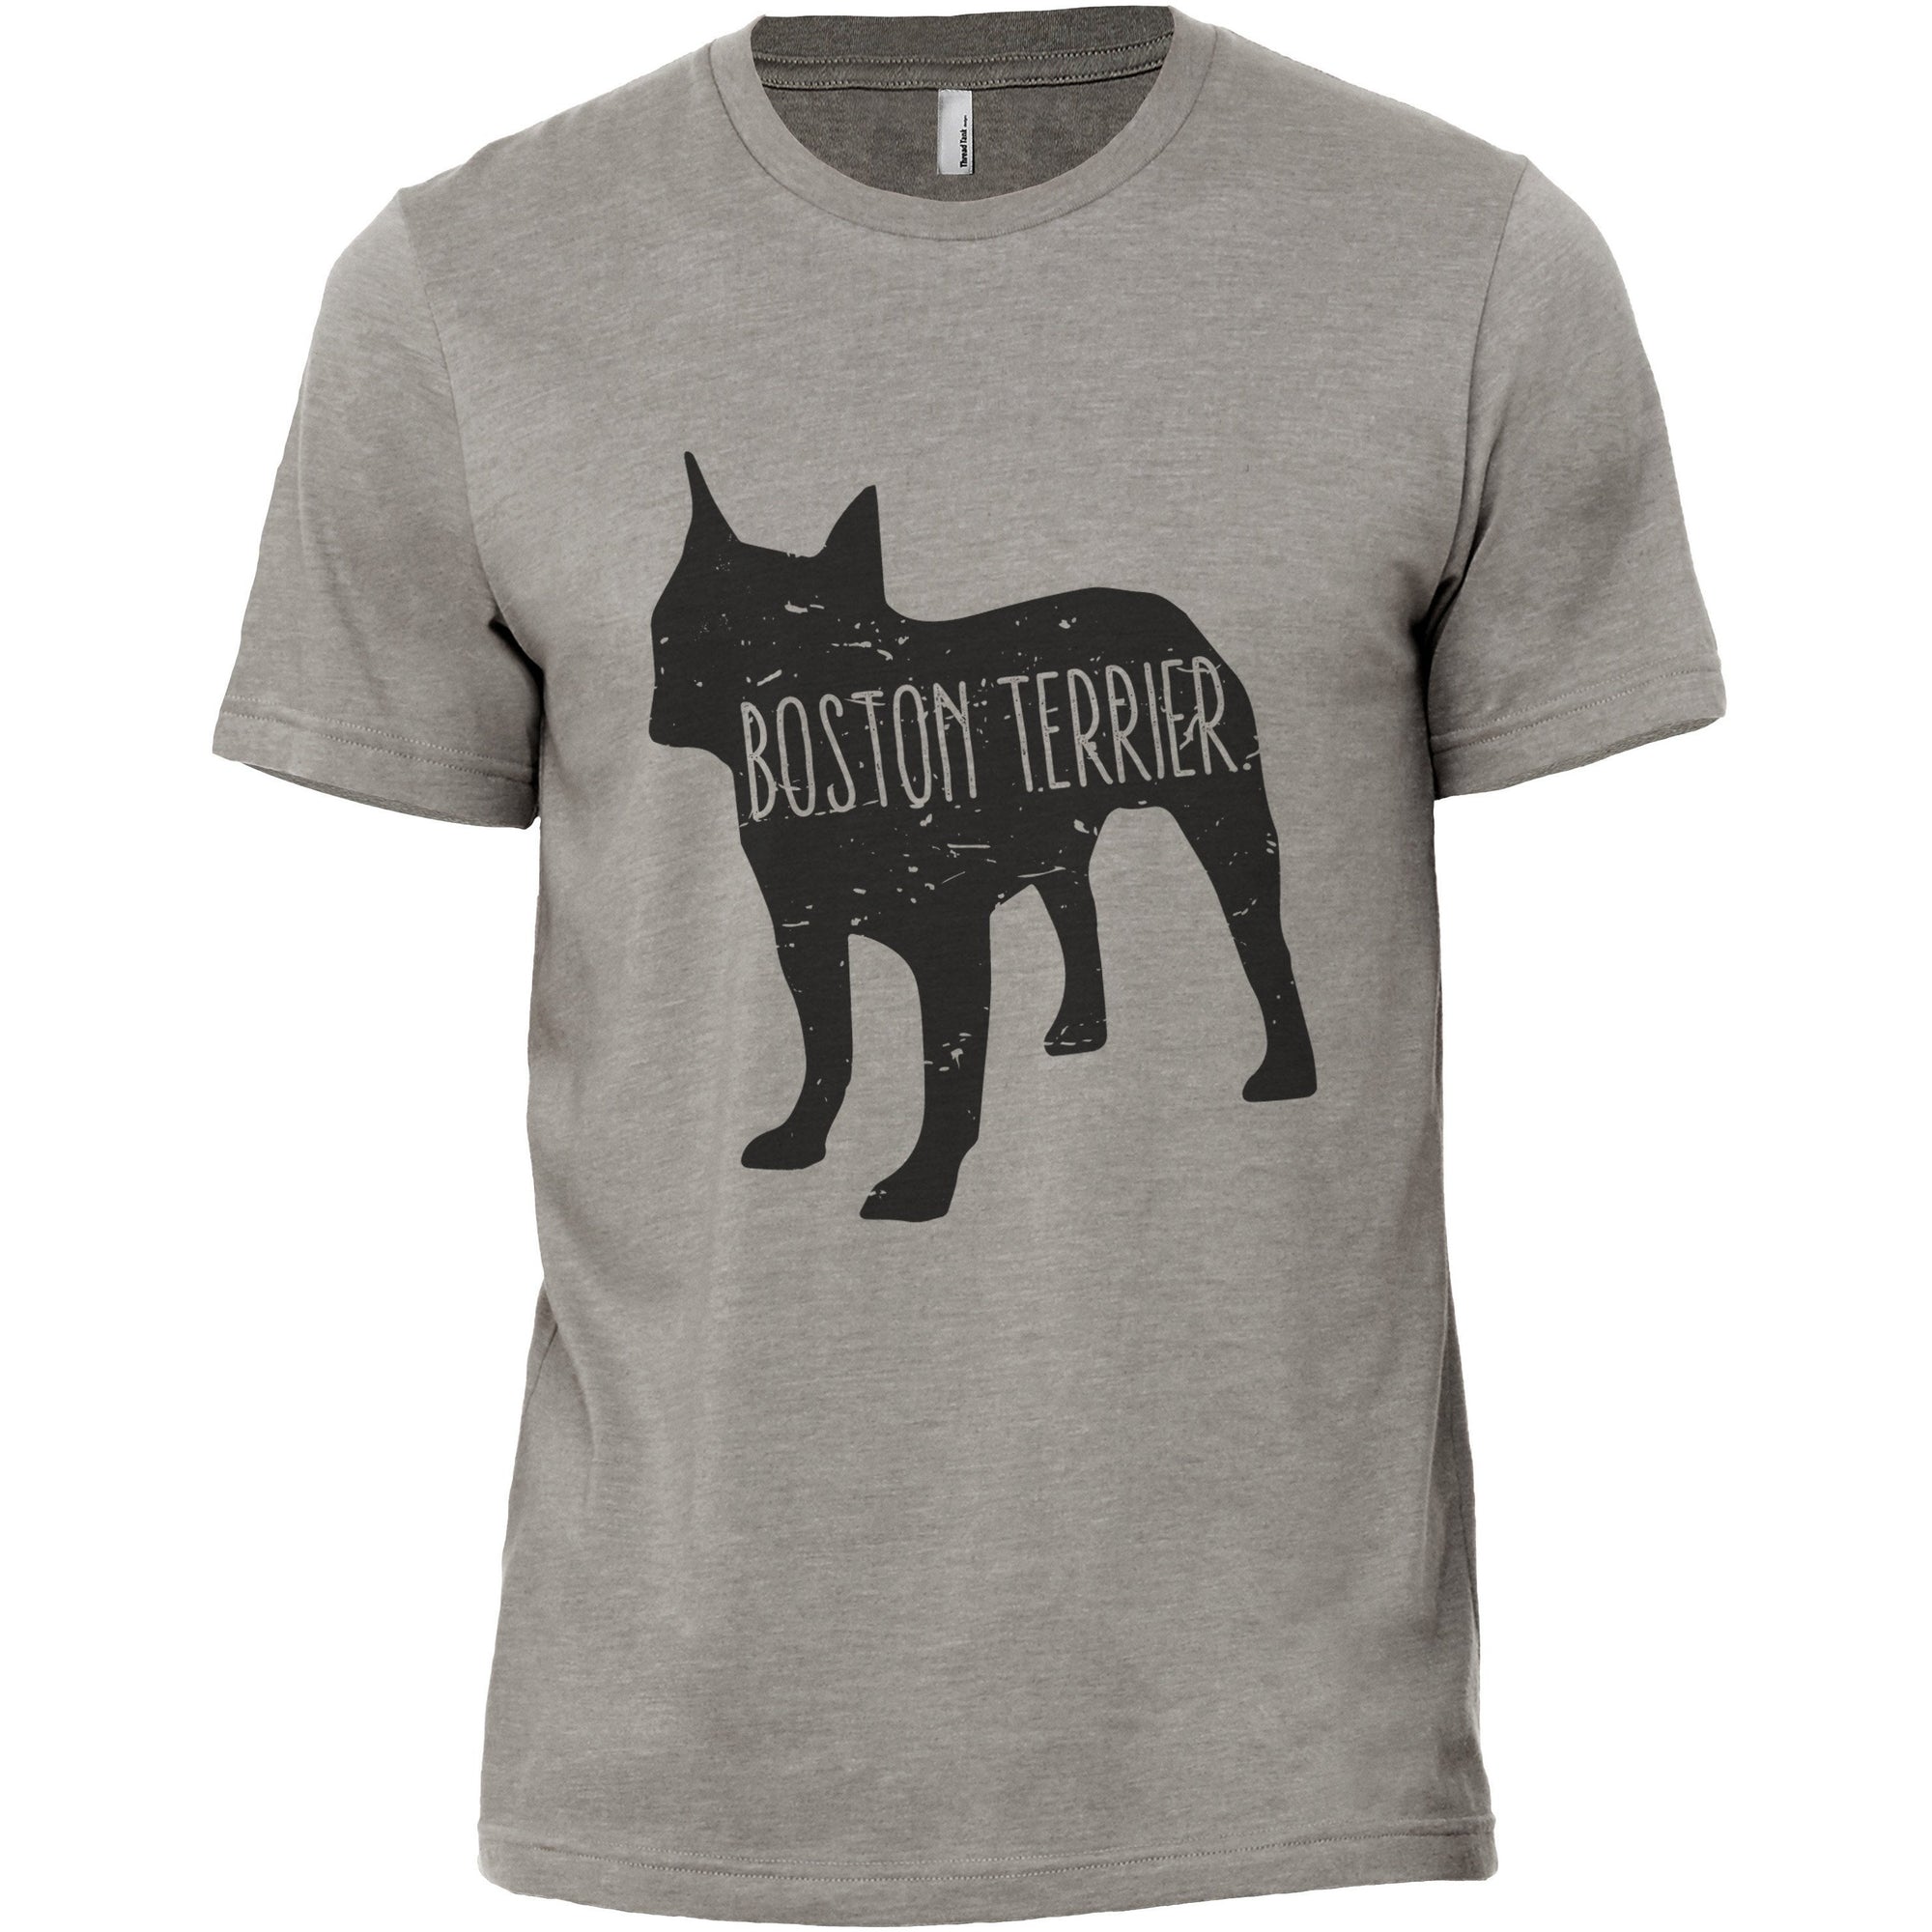 Boston Terrier Dog Silhouette Military Grey Printed Graphic Men's Crew T-Shirt Tee